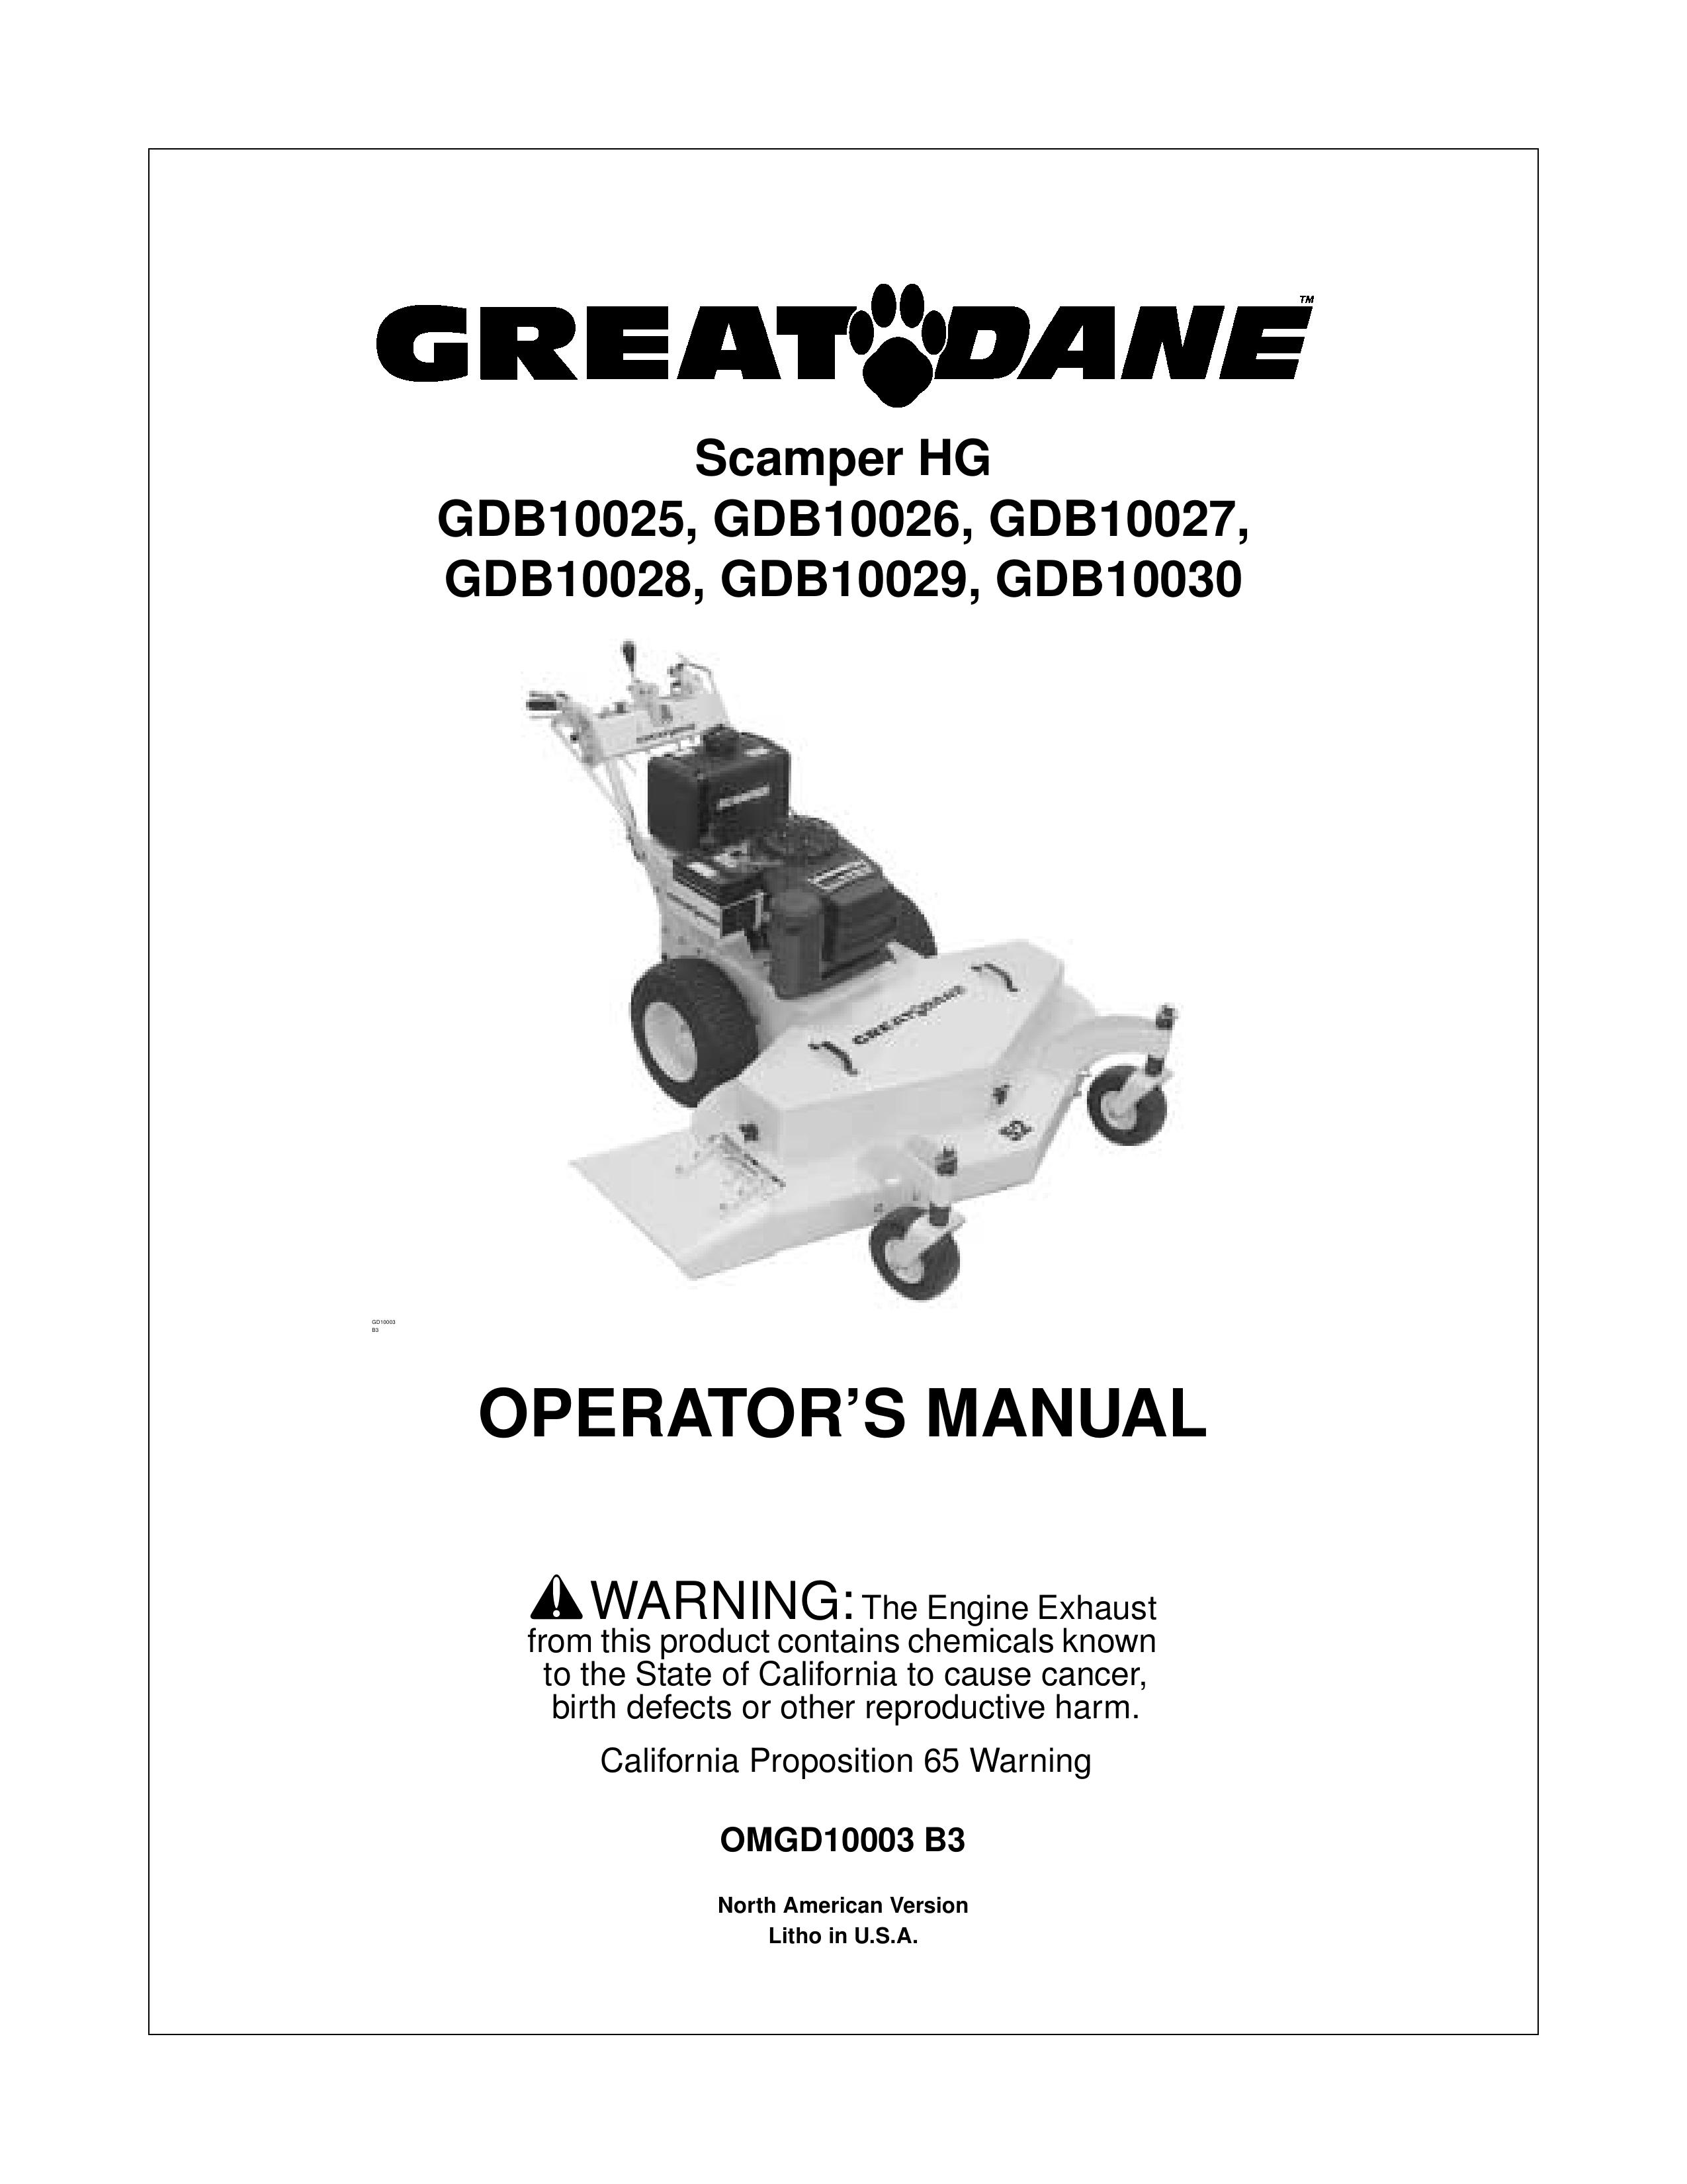 Great Dane GDB10029 Lawn Mower User Manual